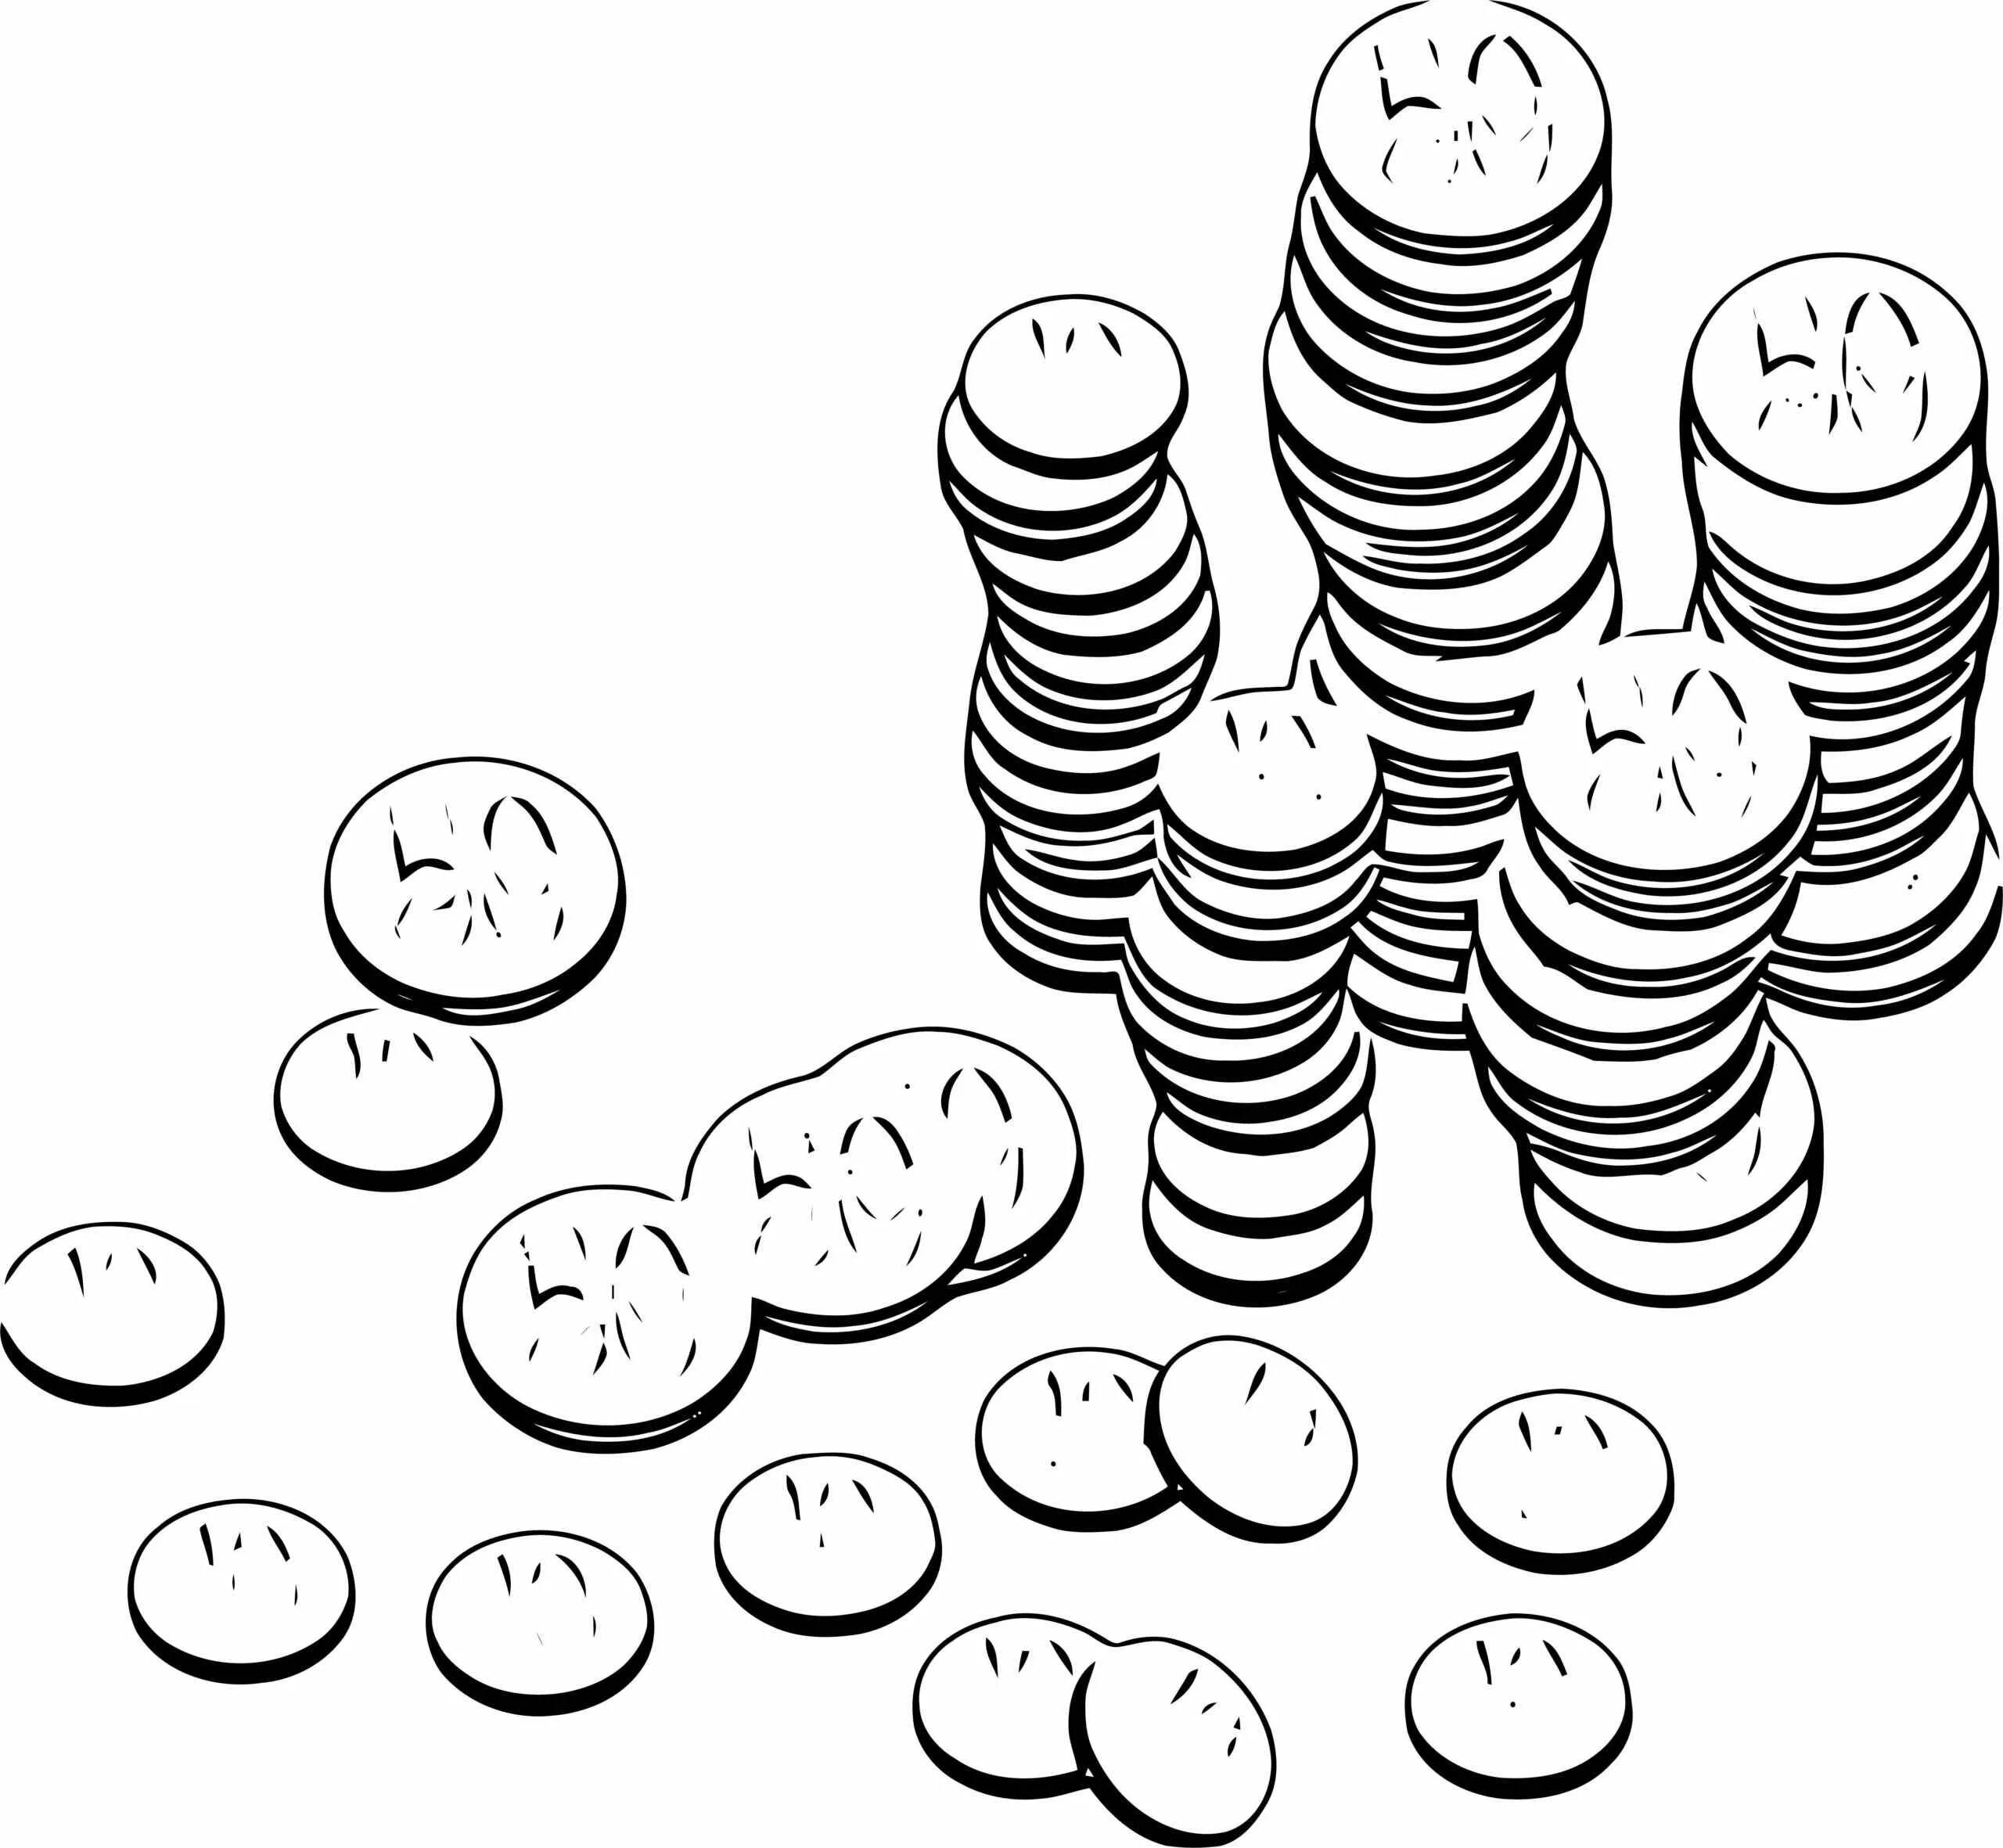 Fun money coloring